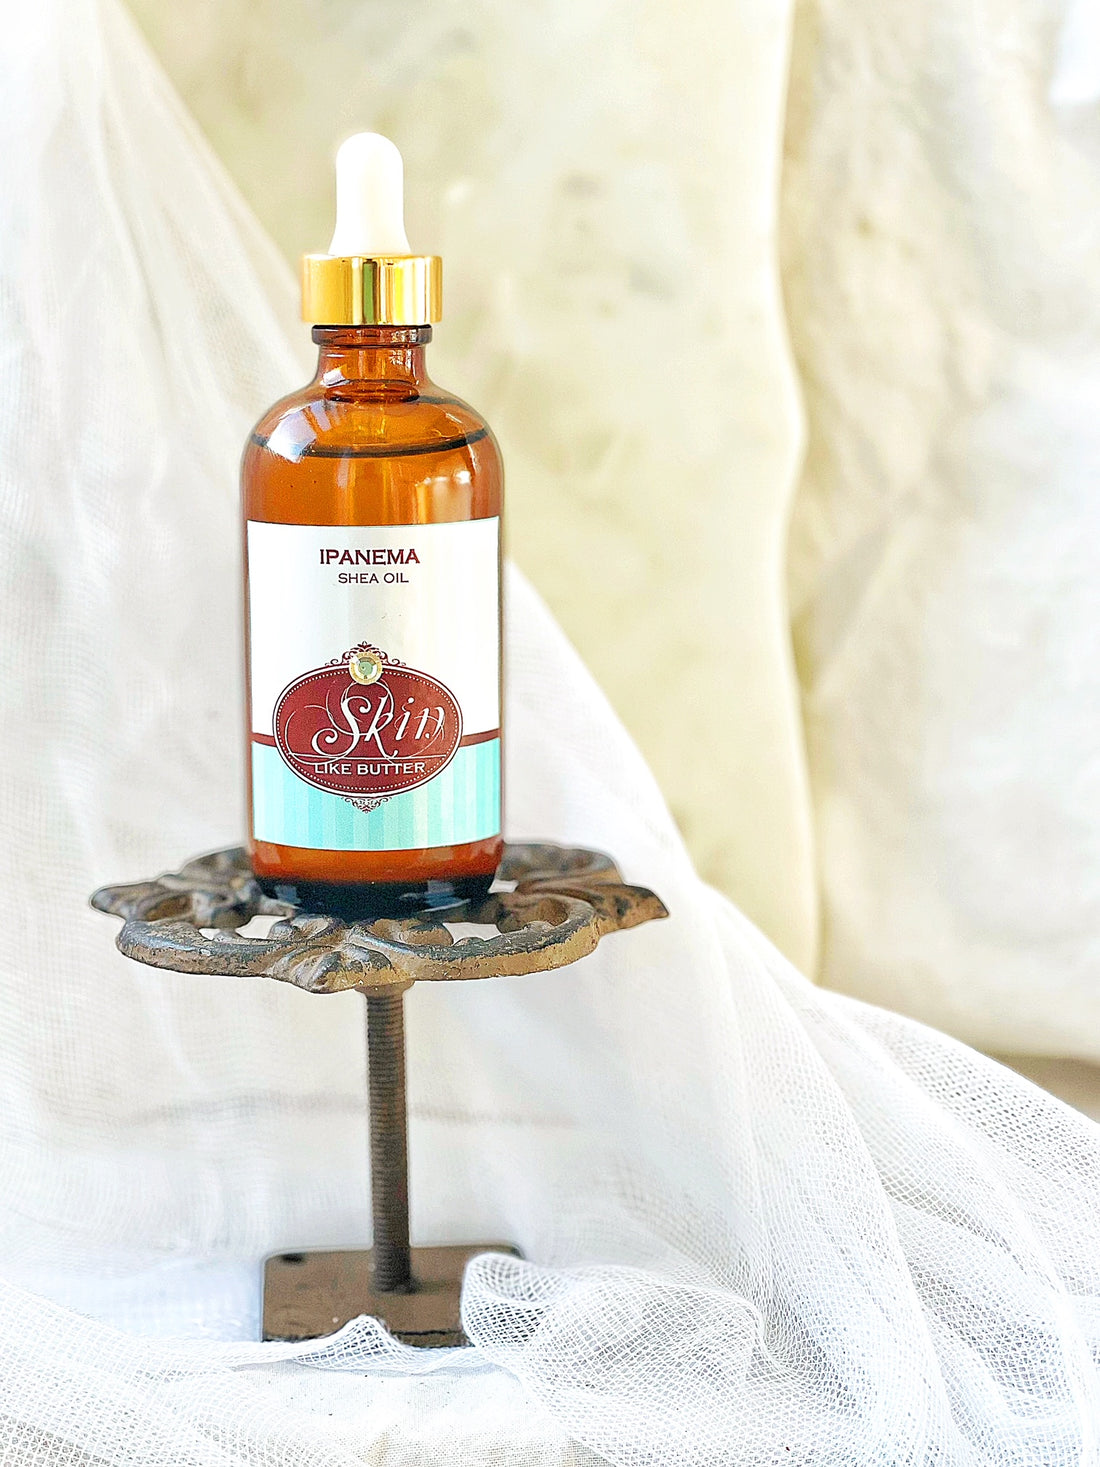 IPANEMA - Shea Oil - in 4 oz amber bottles, highly moisturizing